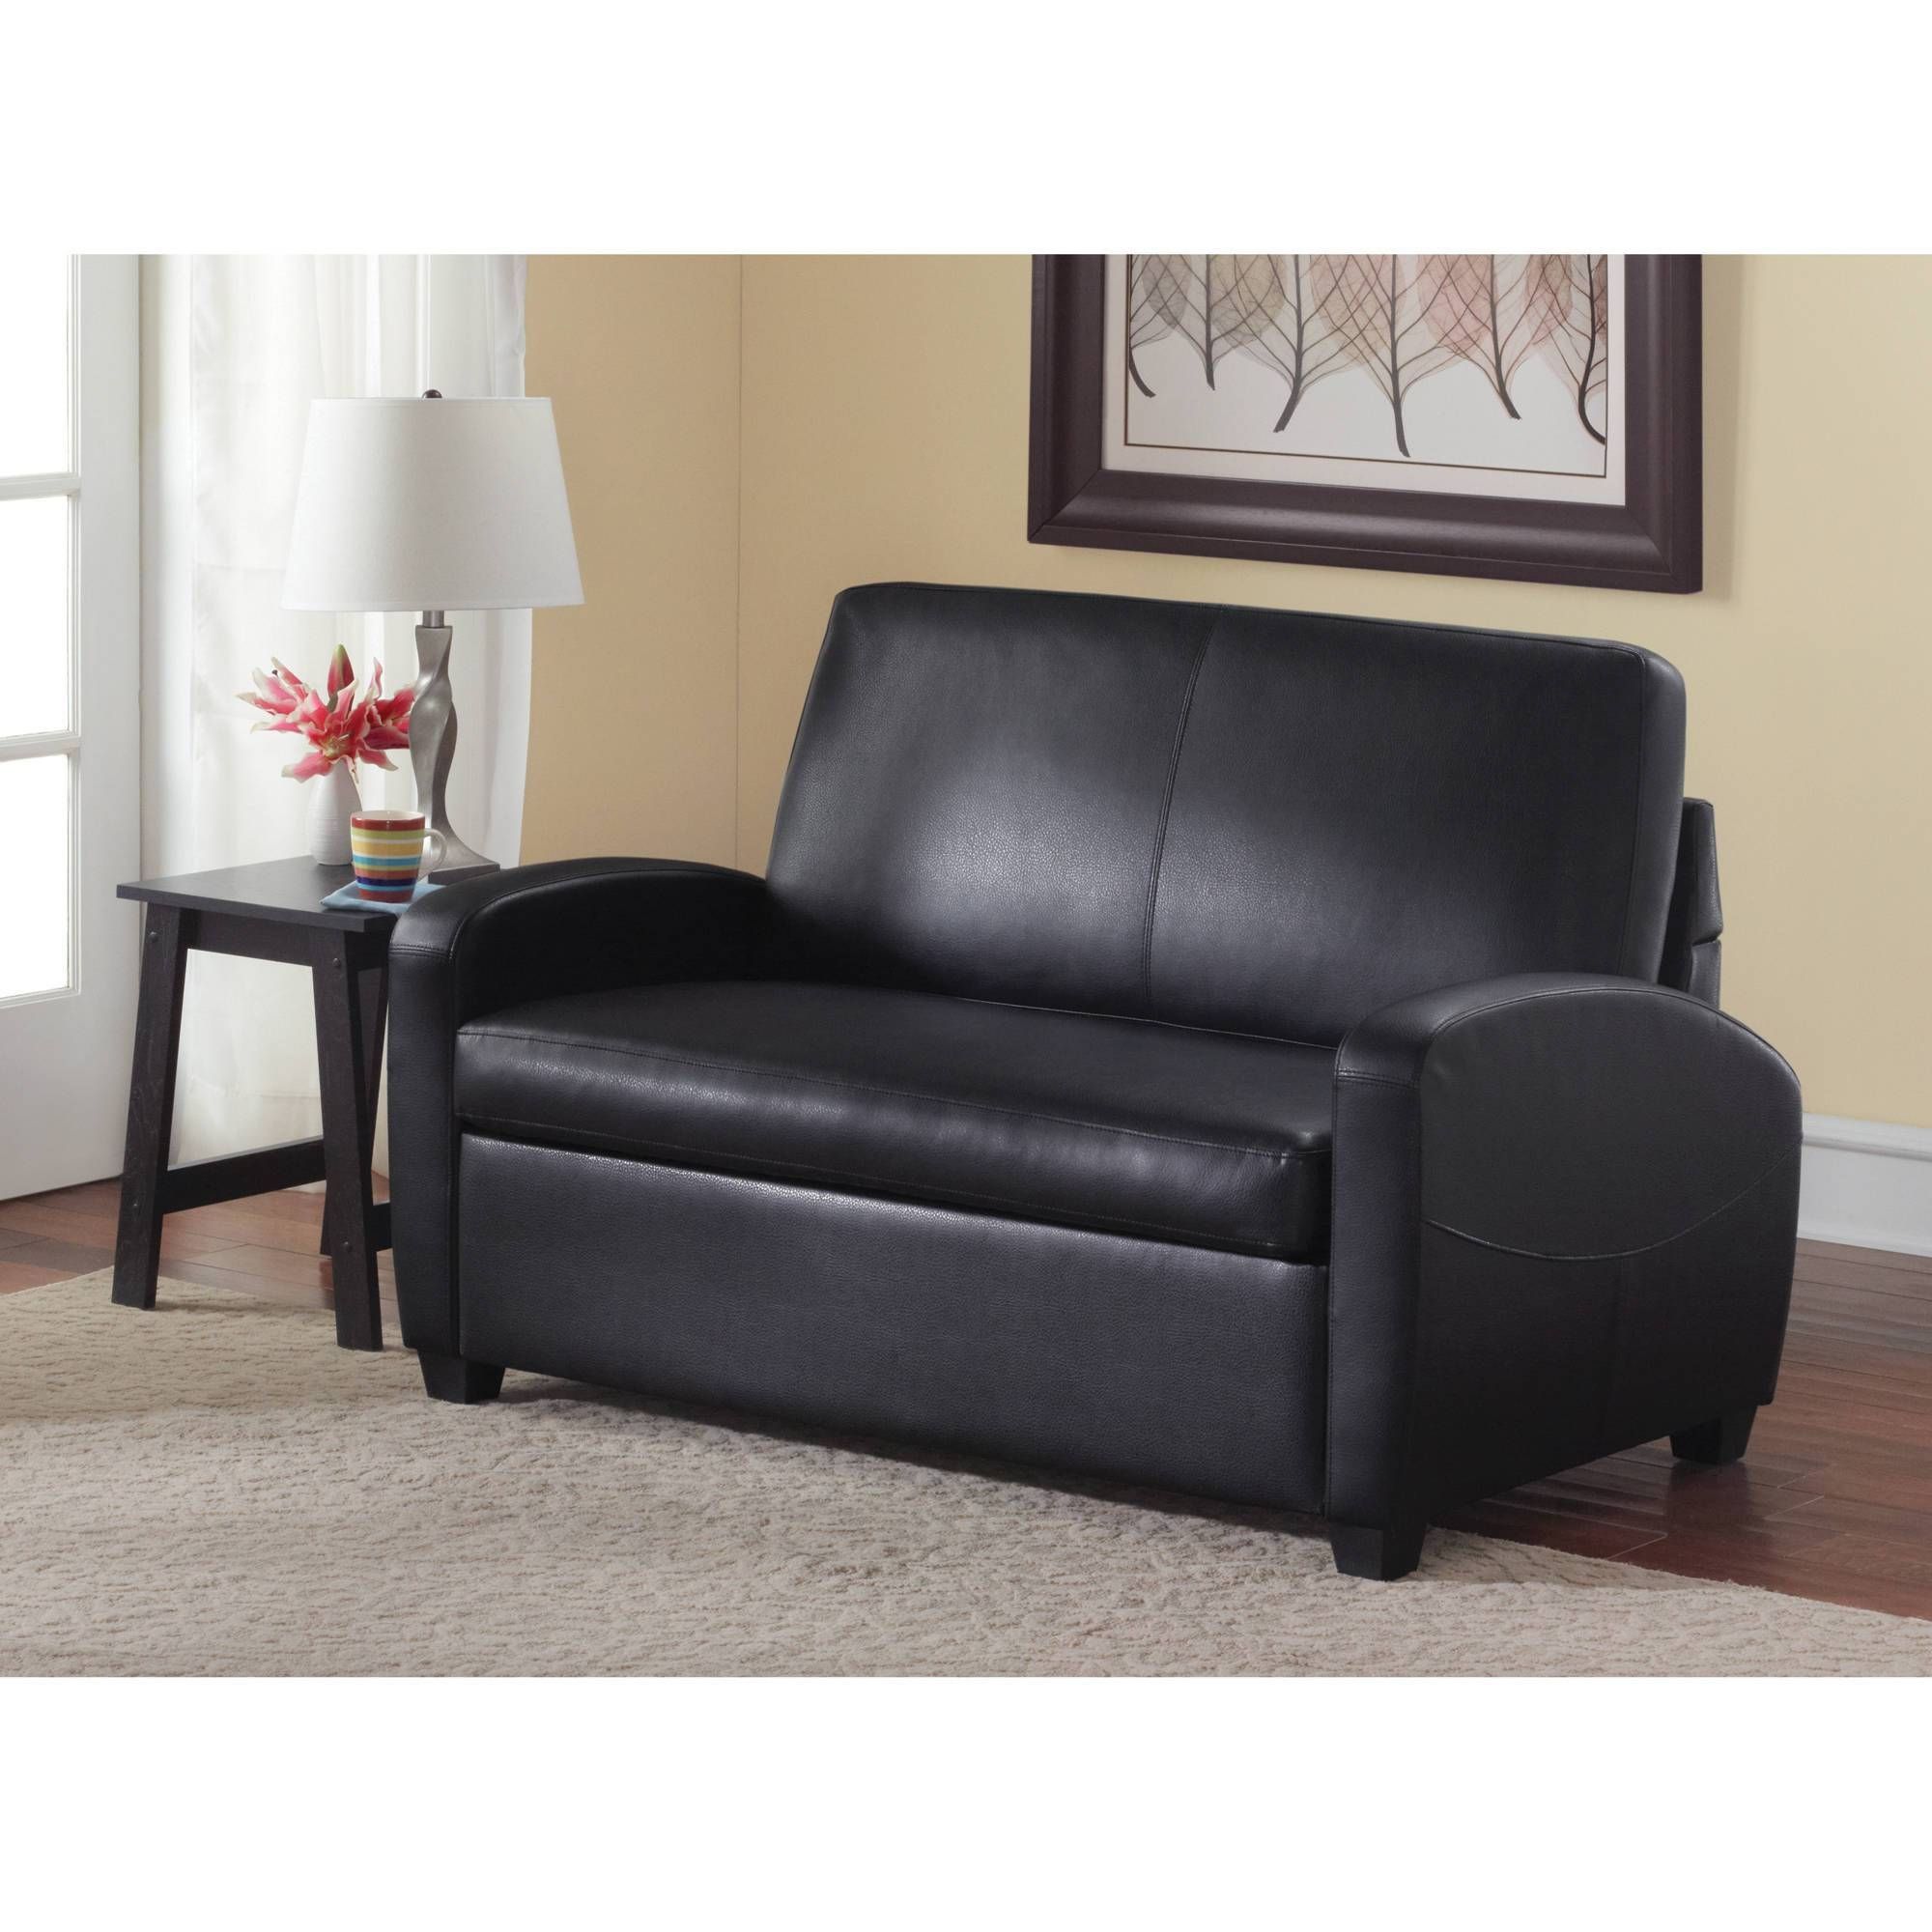 Mainstays Sofa Sleeper, Black – Walmart For Mainstays Sleeper Sofas (View 1 of 15)